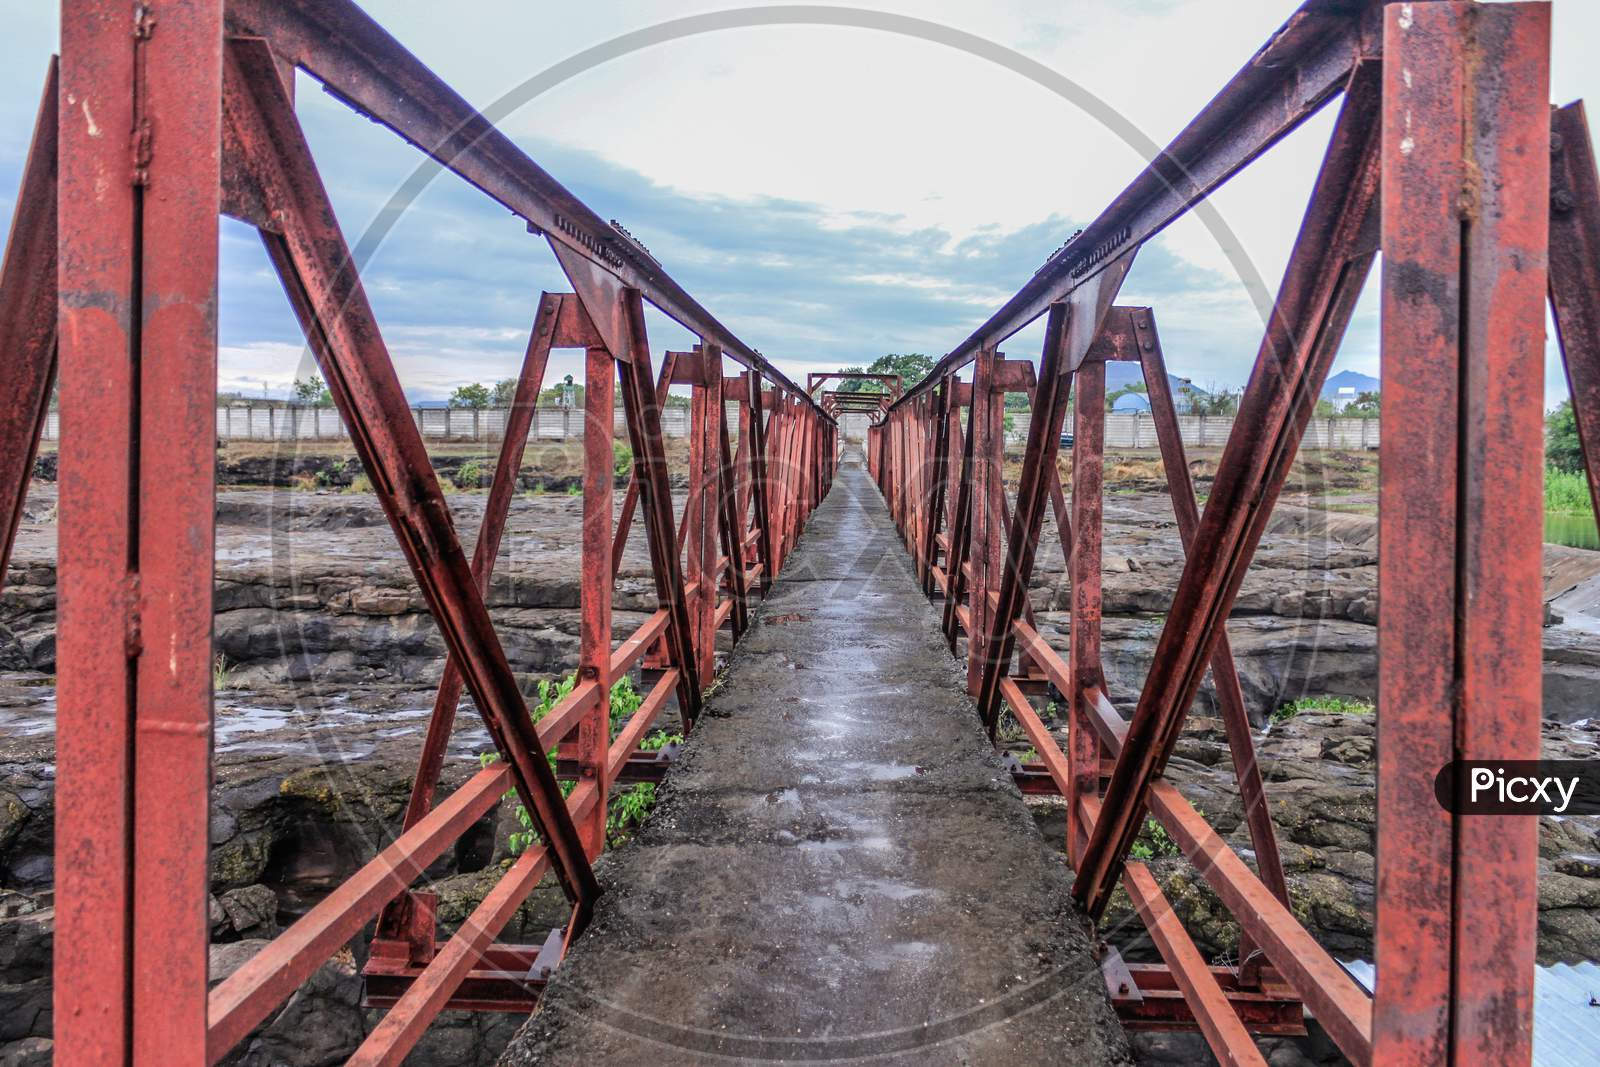 steel truss bridge for pedestrian crossing on a river in rural Indian village